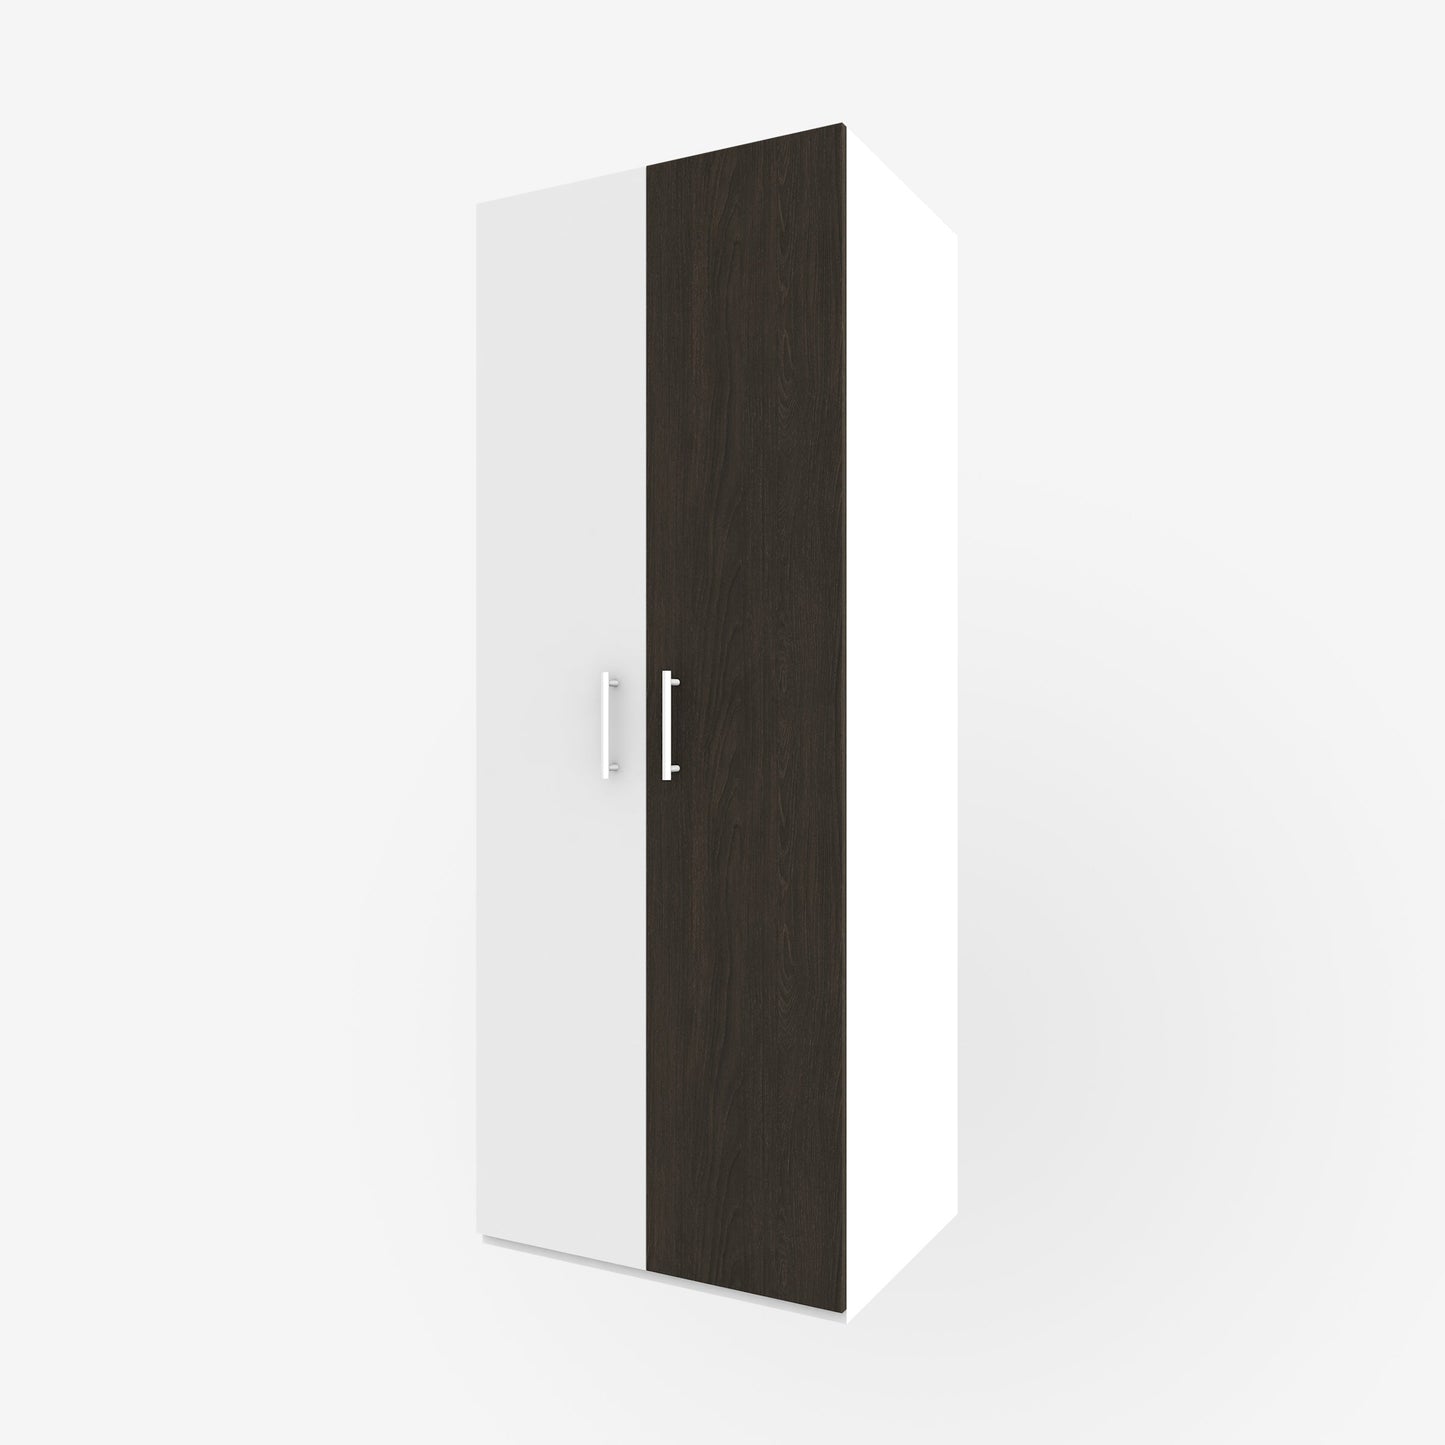 15" x 79" dark wood tone westwood slab door for Ikea or Swedeboxx pax closet cabinet